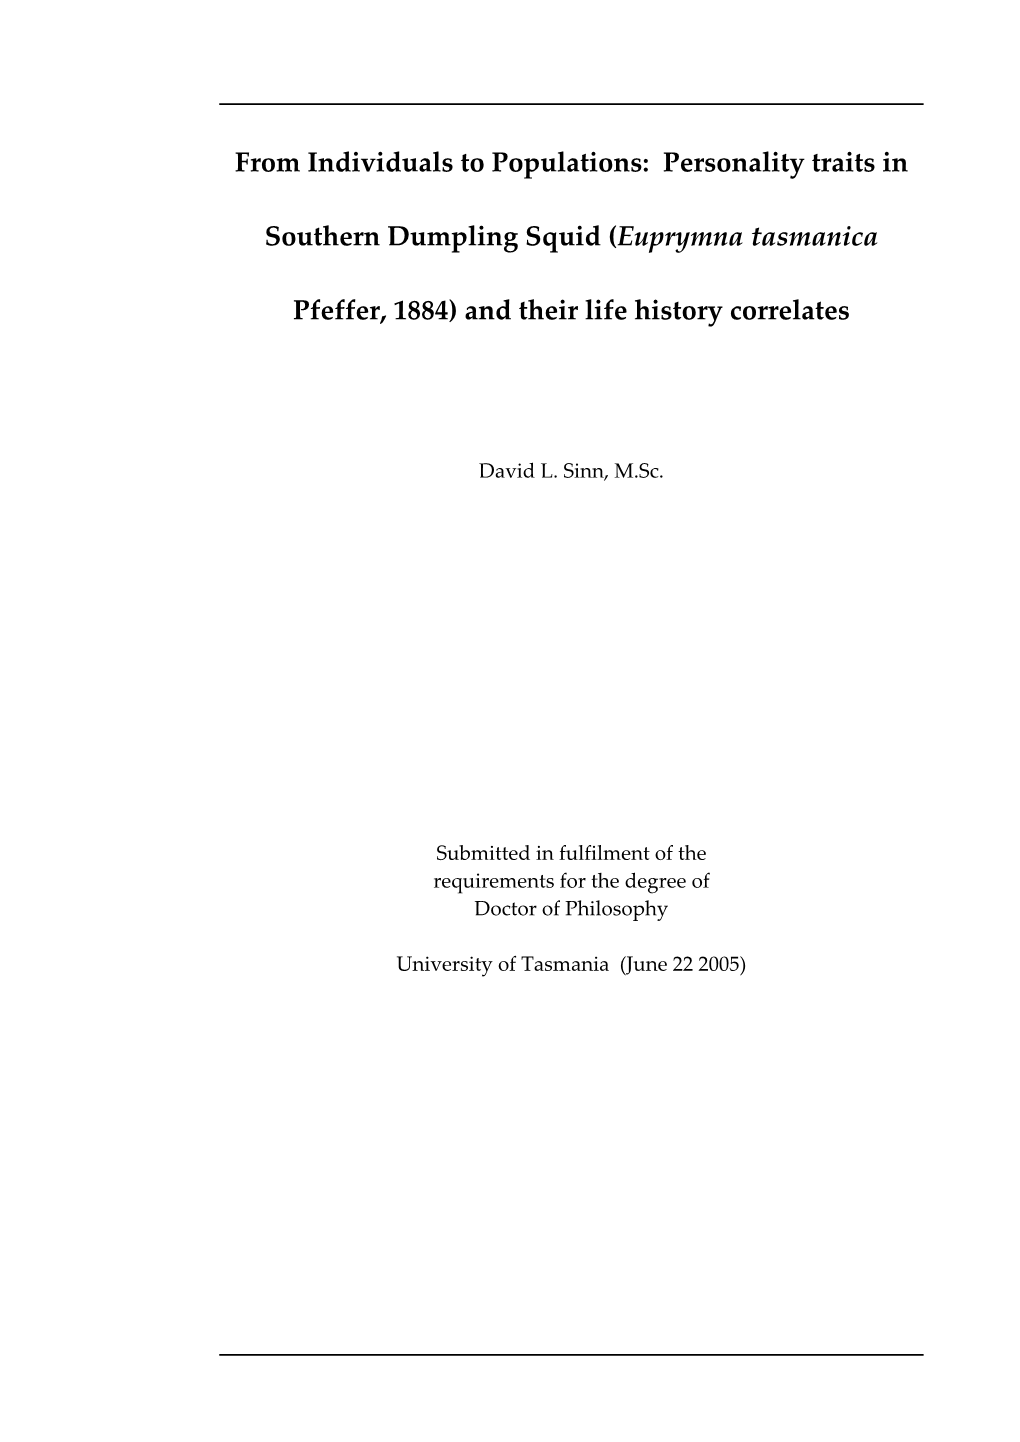 Personality Traits in Southern Dumpling Squid (Euprymna Tasmanica Pfeffer, 1884) and Their Life History Correlates